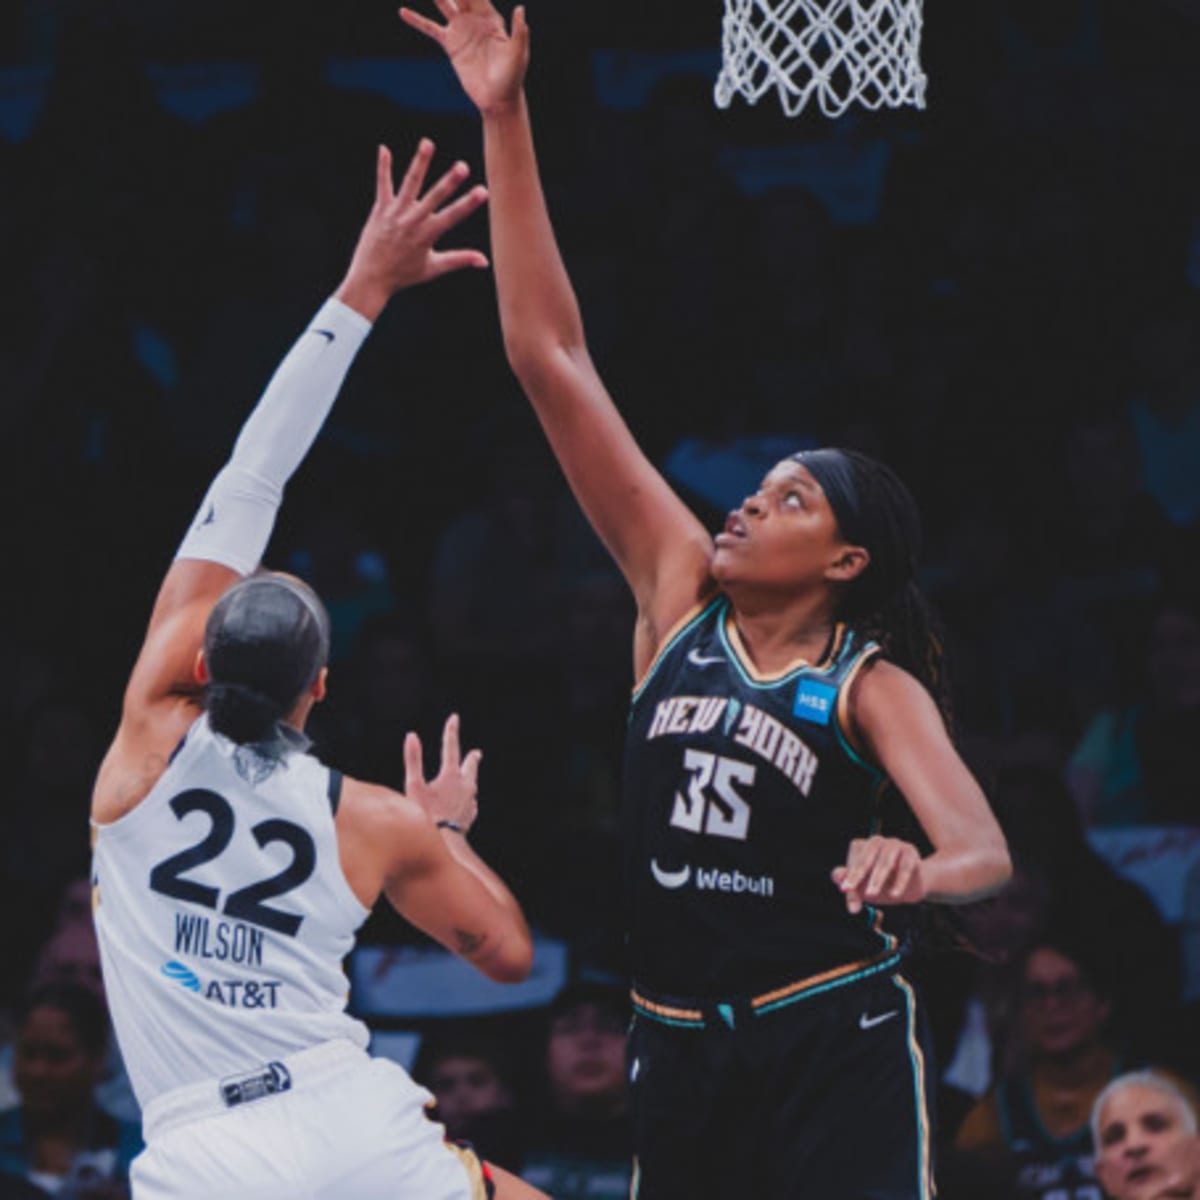 Aces set WNBA regular season wins record with 16-point comeback vs